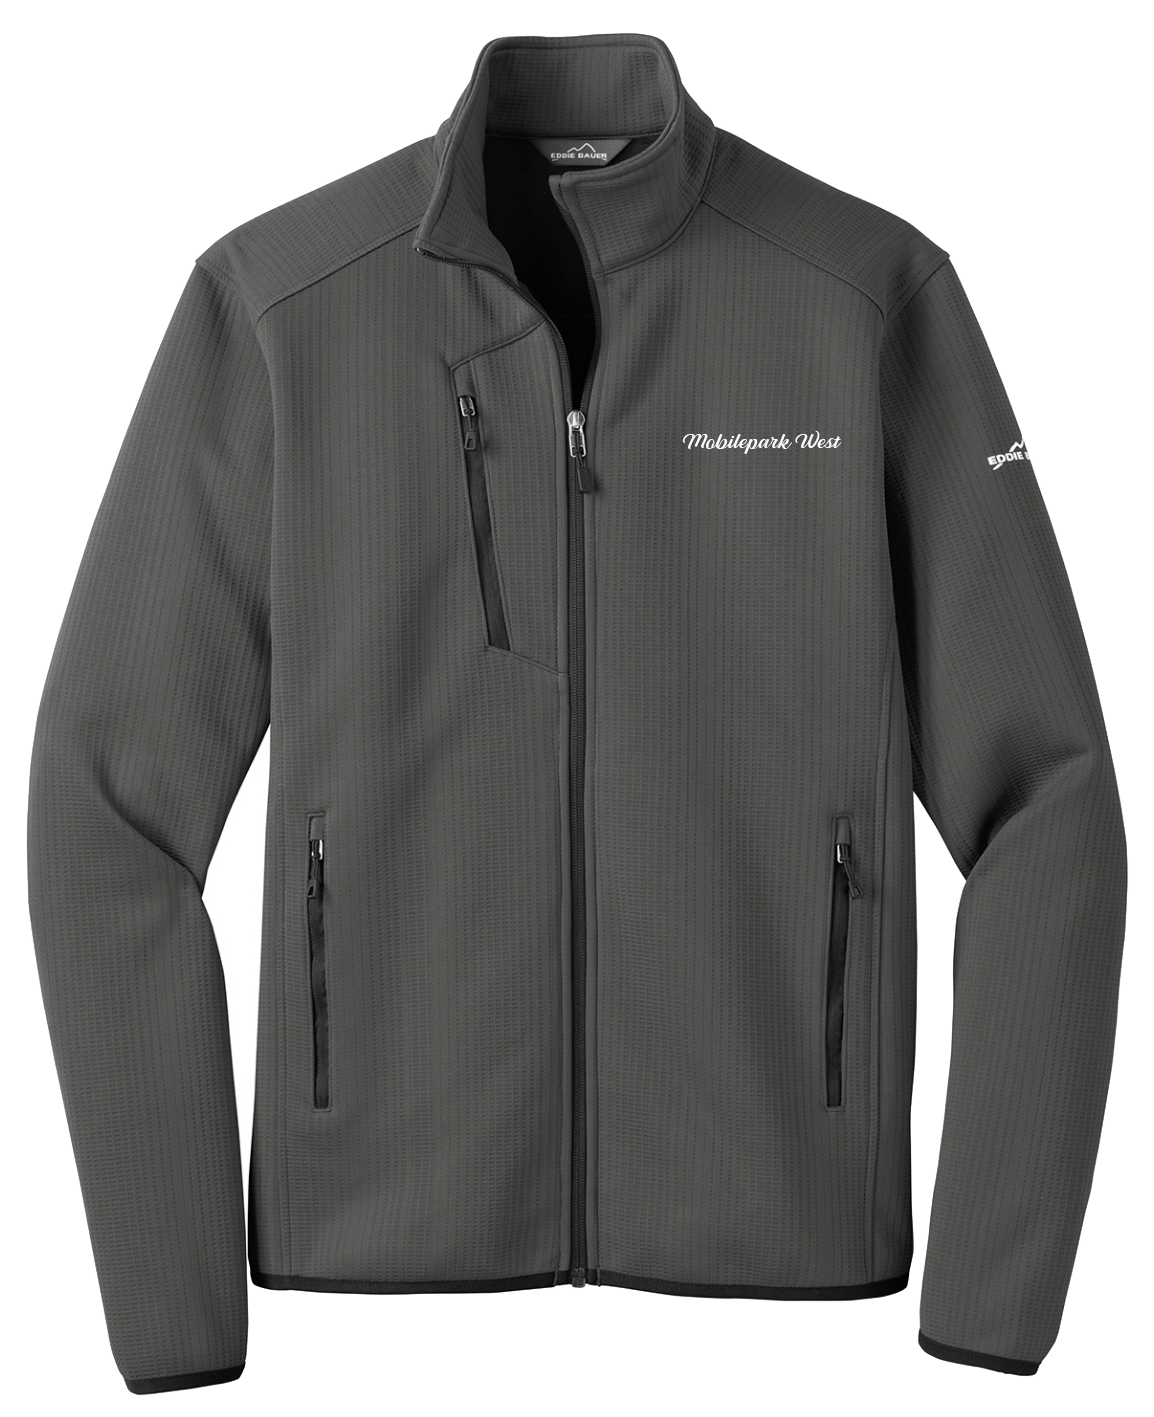 Mobilepark West - Mens - Eddie Bauer ® Dash Full-Zip Fleece Jacket